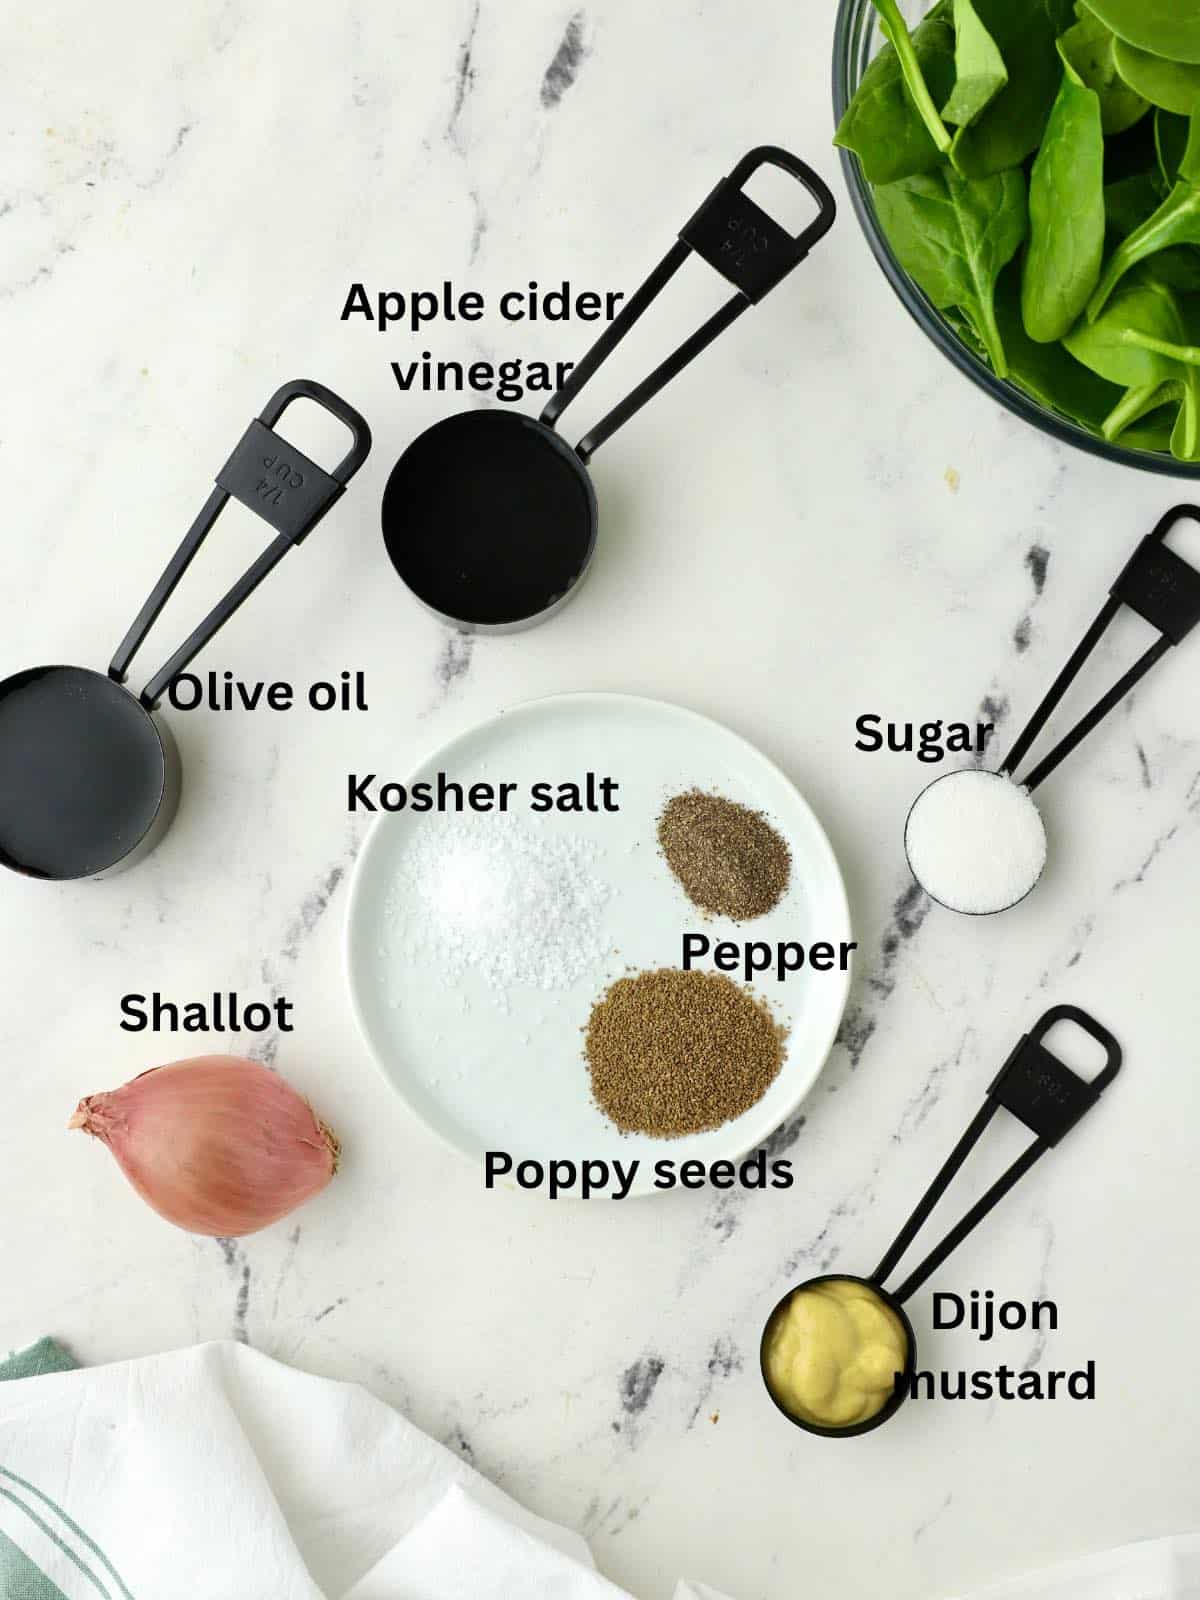 Poppyseed dressing ingredients including apple cider vinegar, olive oil, and Dijon mustard. 